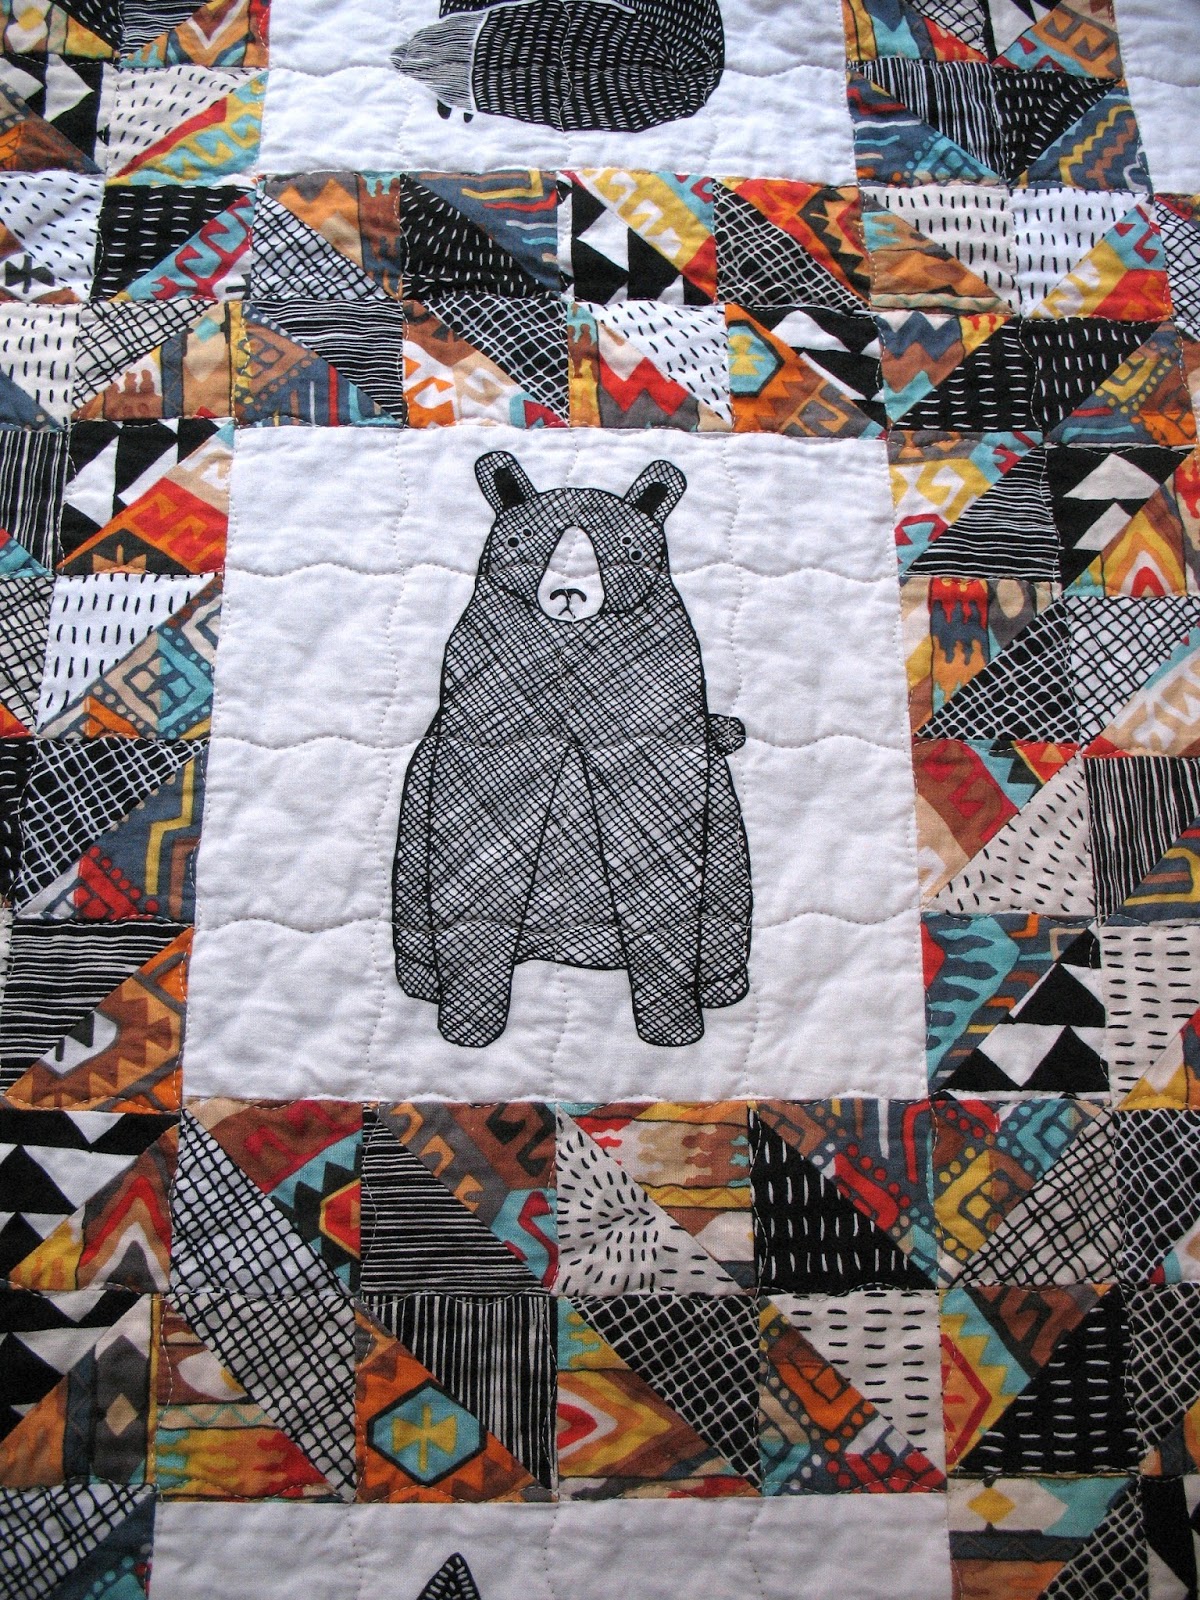 UniqueFabricPanels 13x13 inch Quilt Square, Cute Image of Baby Snow  Leopard, Animals Fabric Panel, Fabric Panel for Quilting, Baby Quilt Panel,  Cotton